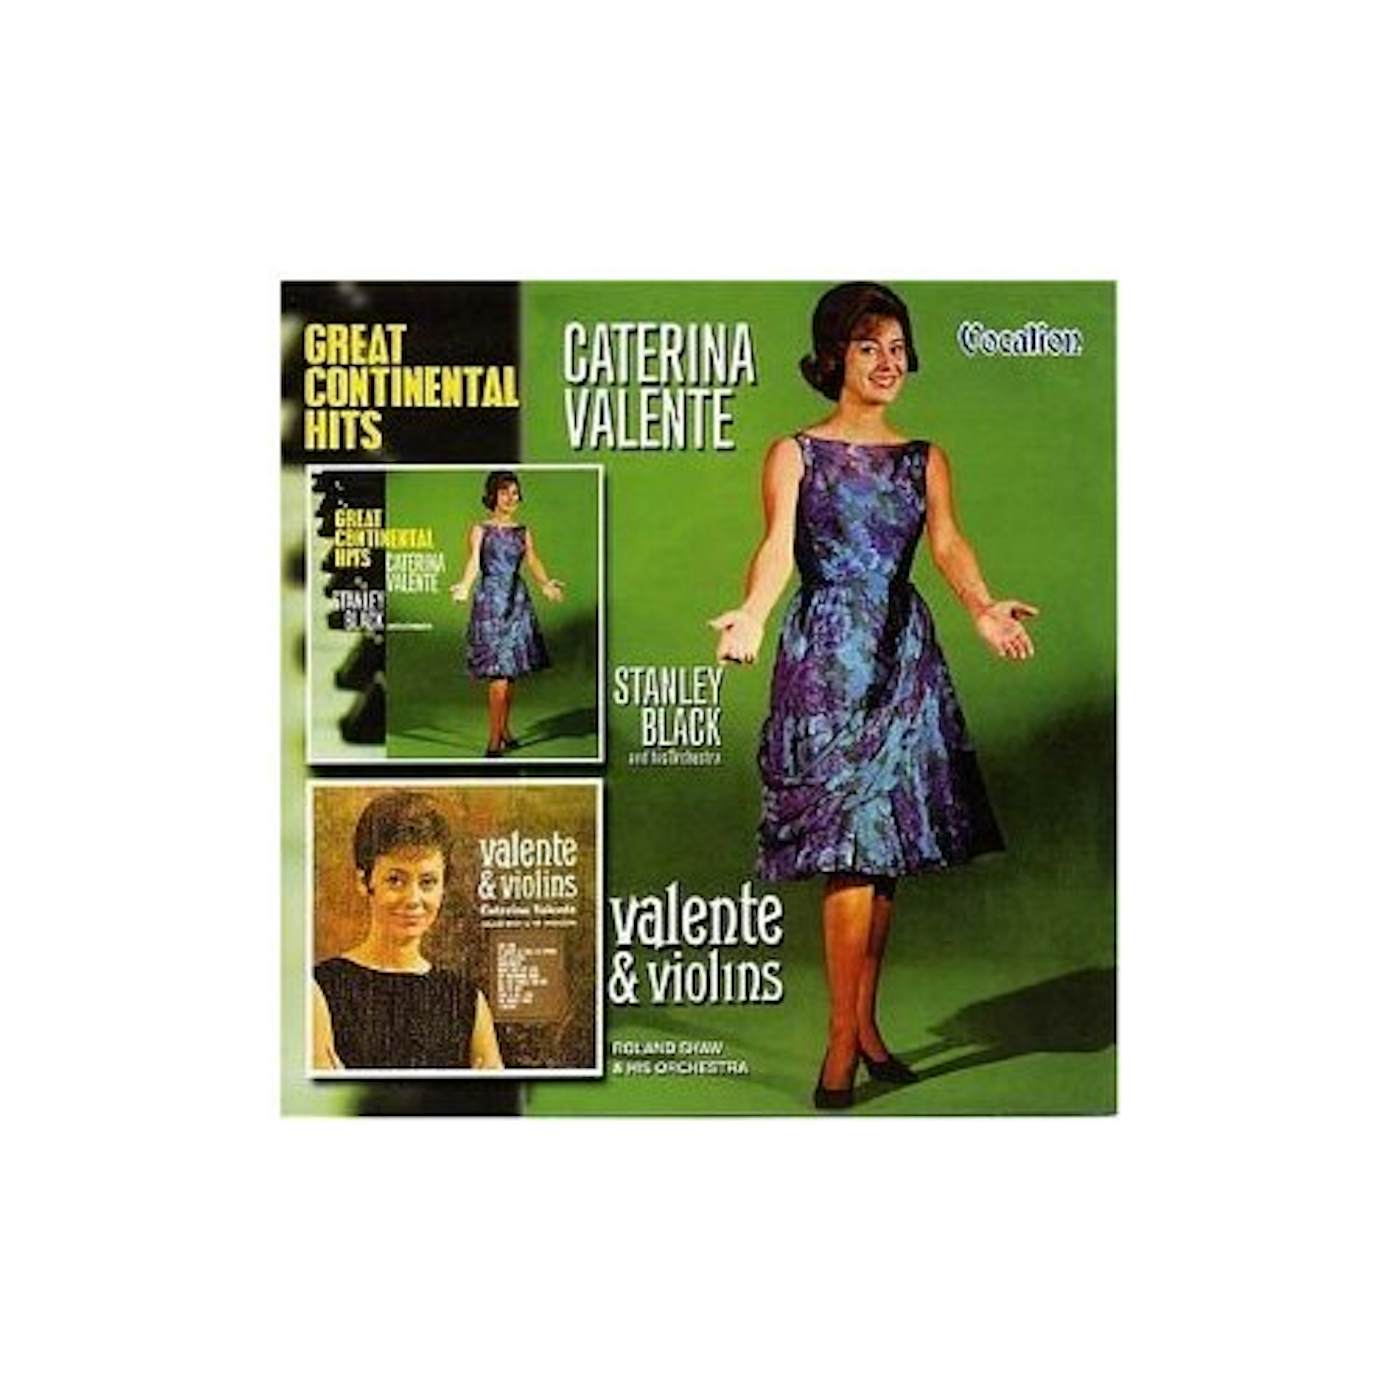 Caterina Valente GREAT CONTINENTAL HITS / VALENTE & VIOLINS CD